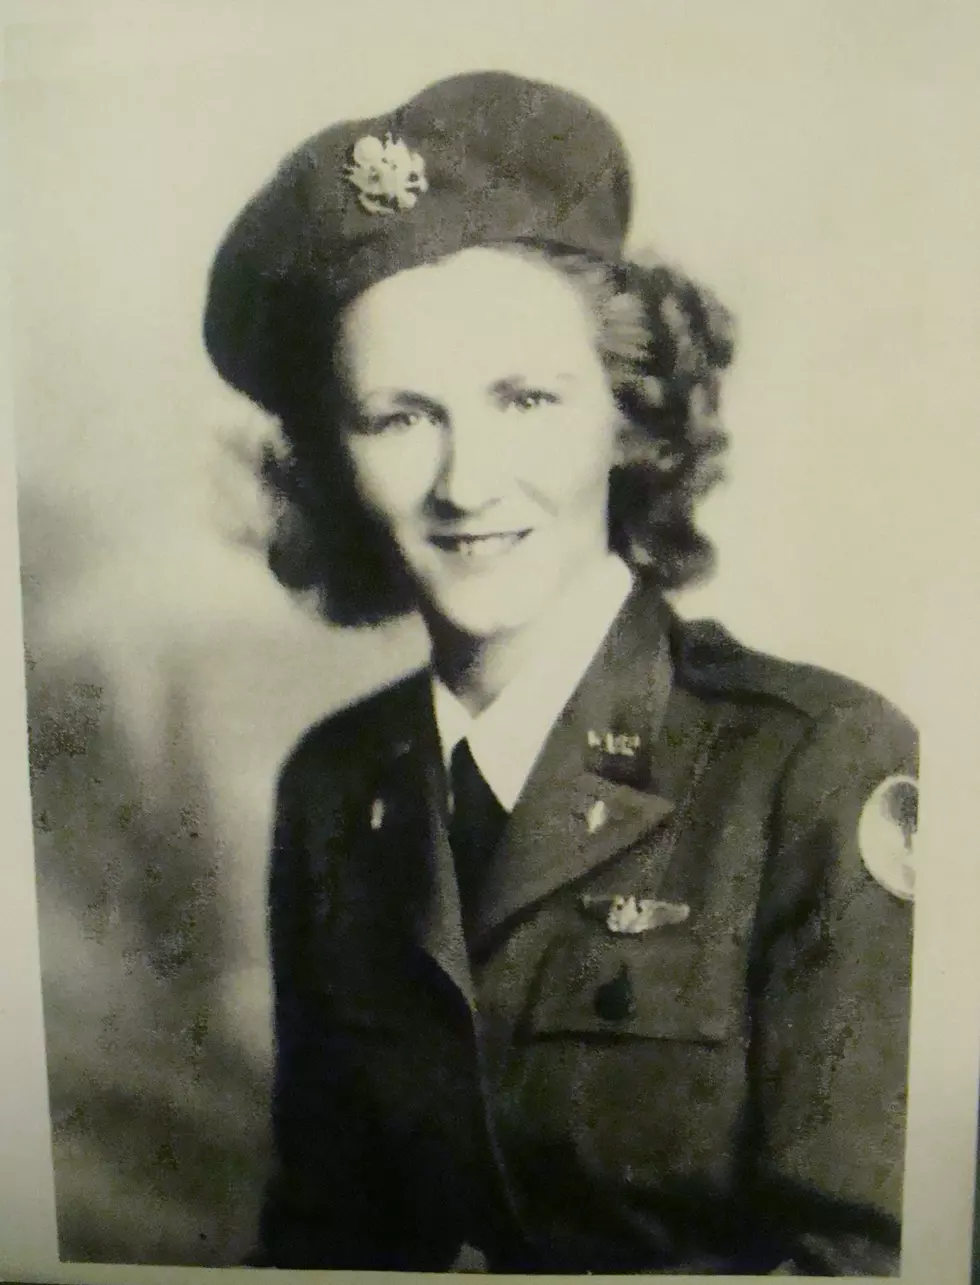 A Look Back: Liz Strofus, Women Airforce Service Pilot, Rice County